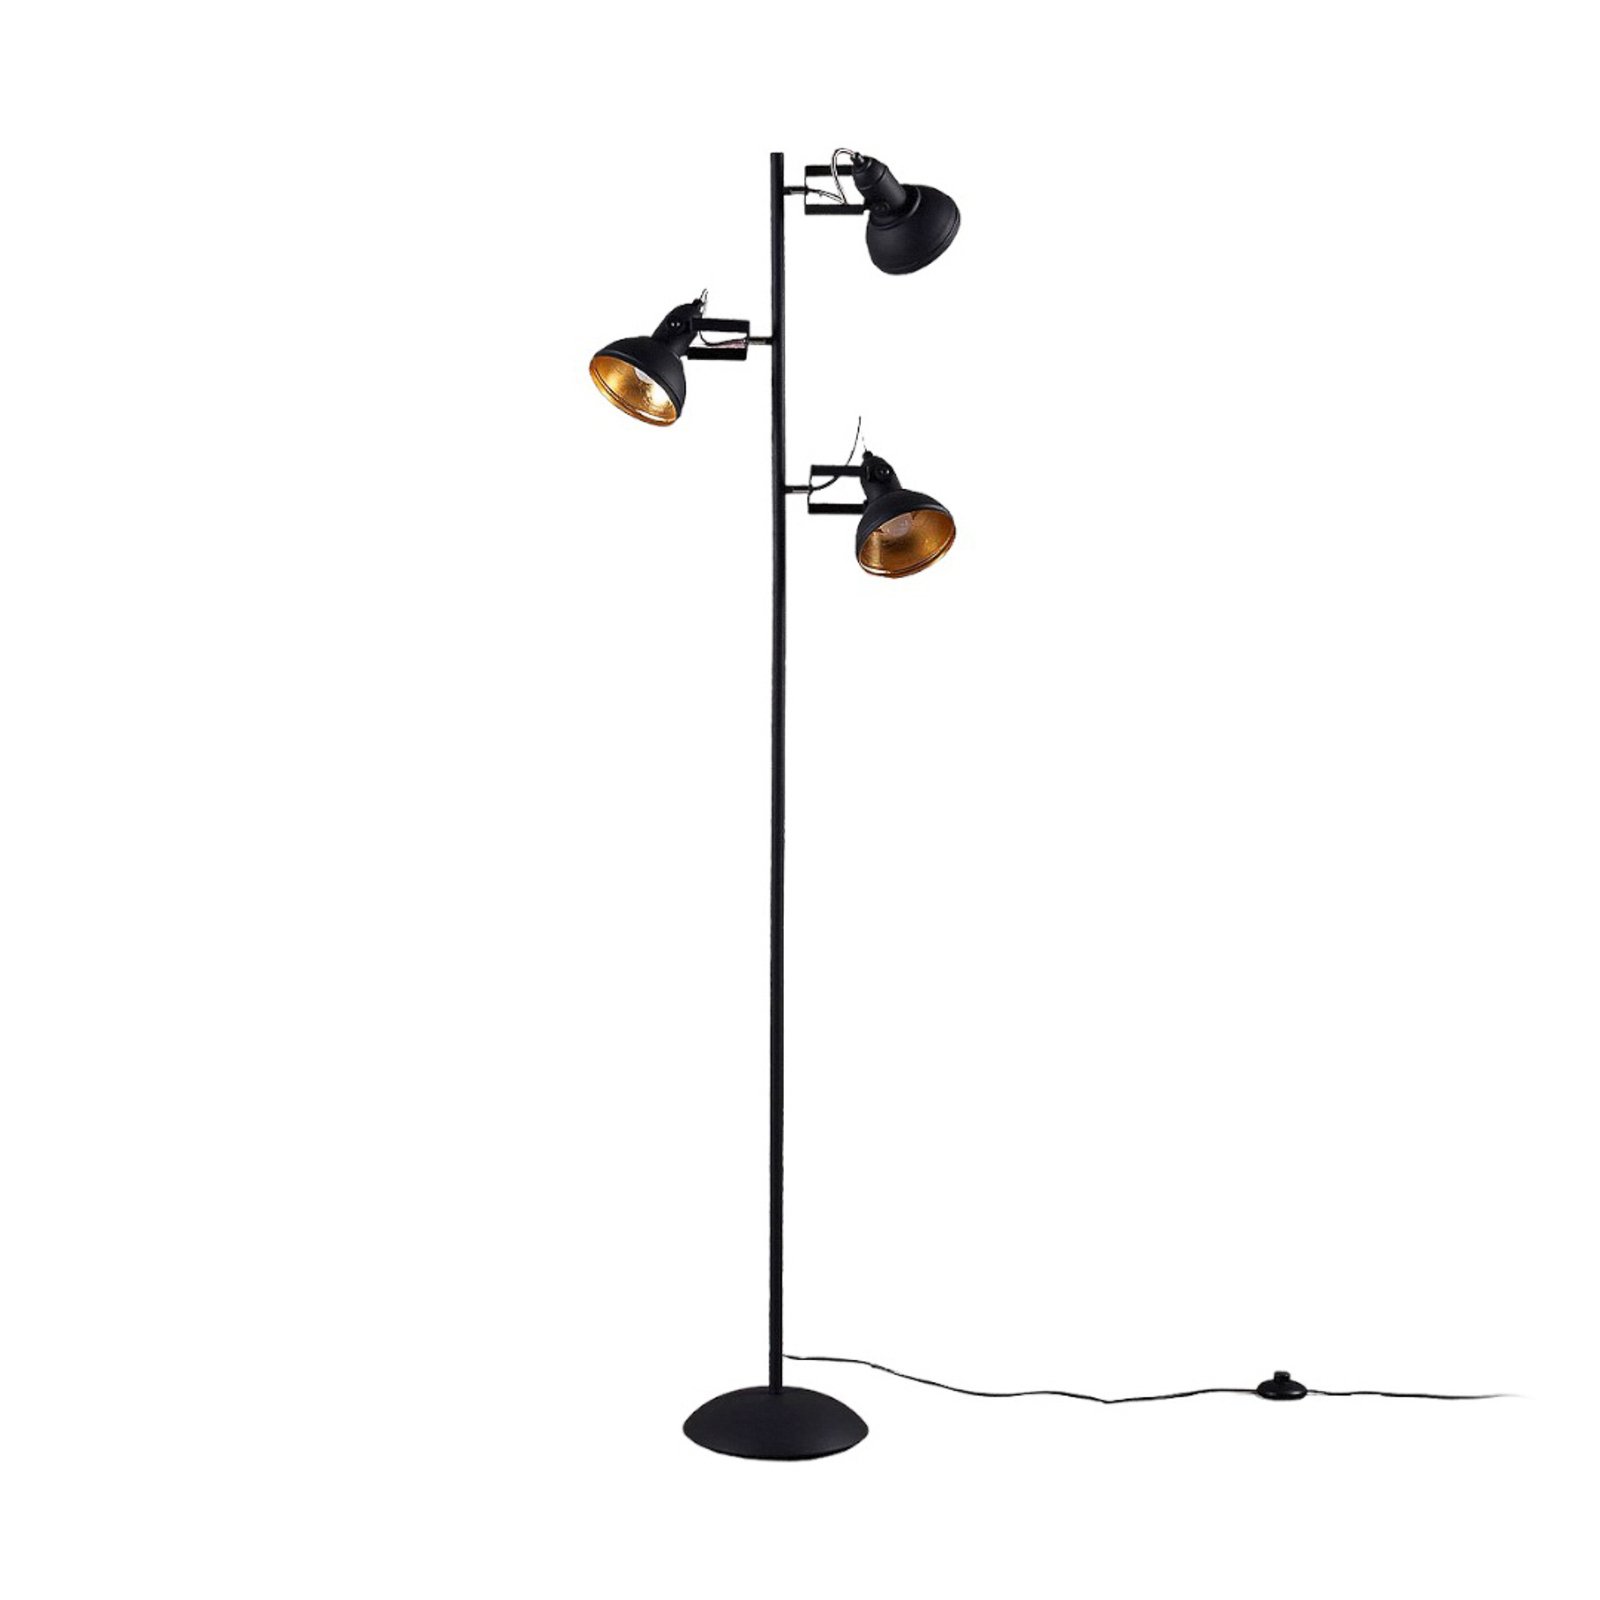 Black Lilly LED floor lamp with three spotlights